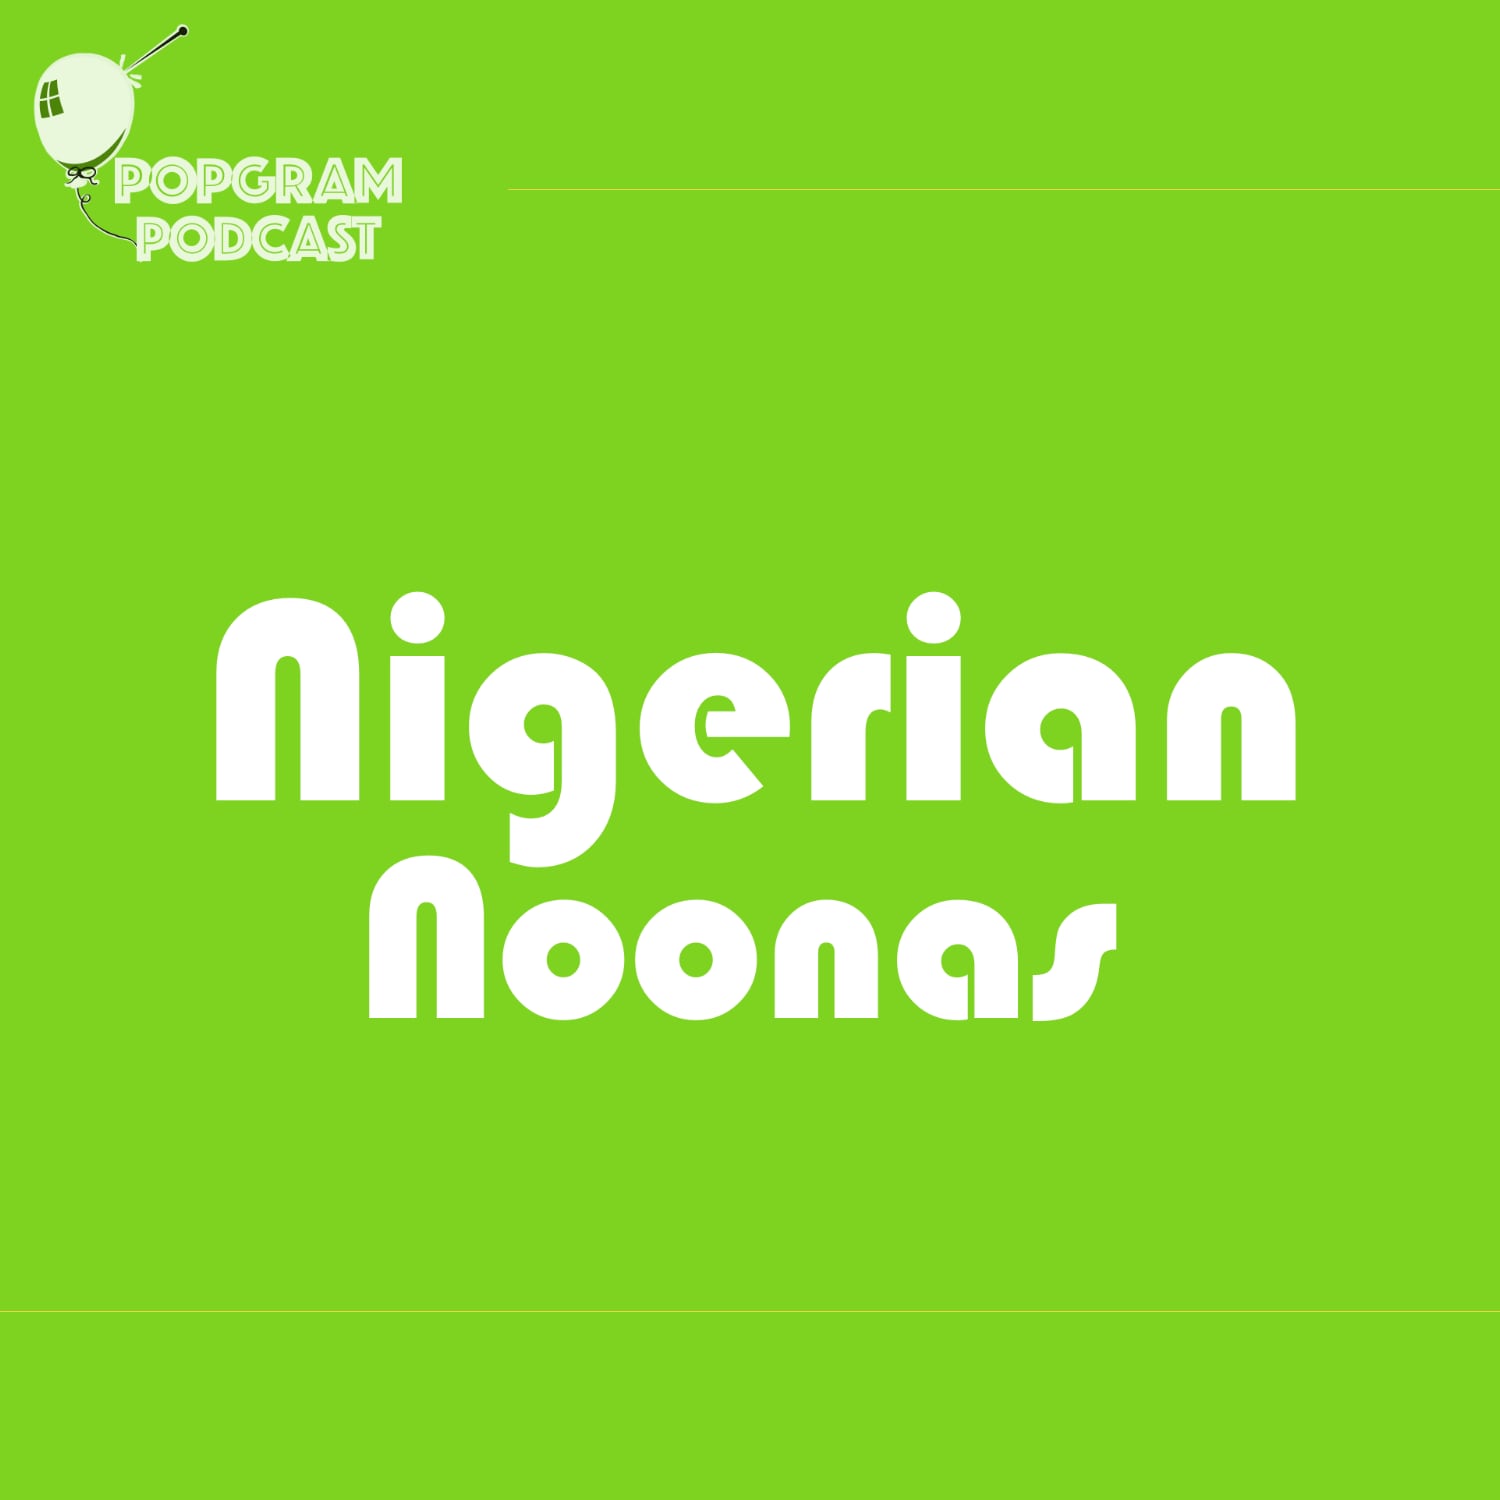 Nigerian Noonas